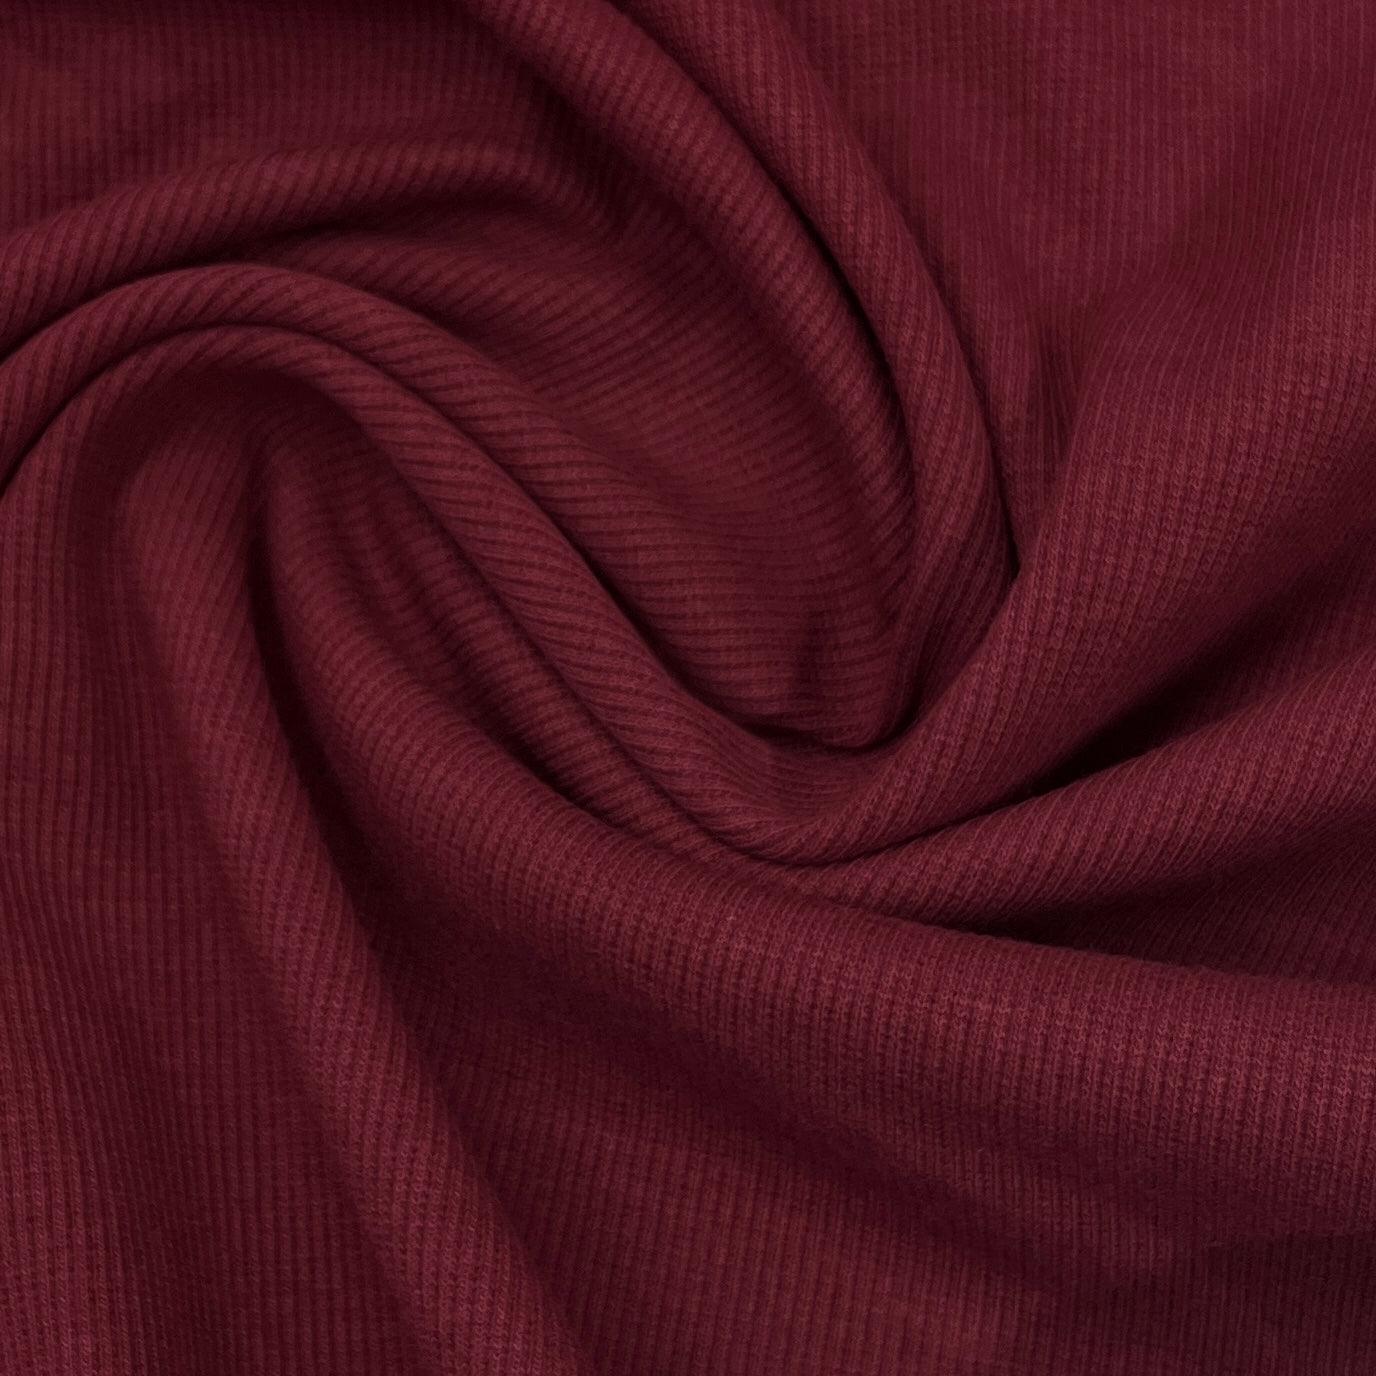 Heretic 2x2 Organic Cotton Rib Knit Fabric - Nature's Fabrics